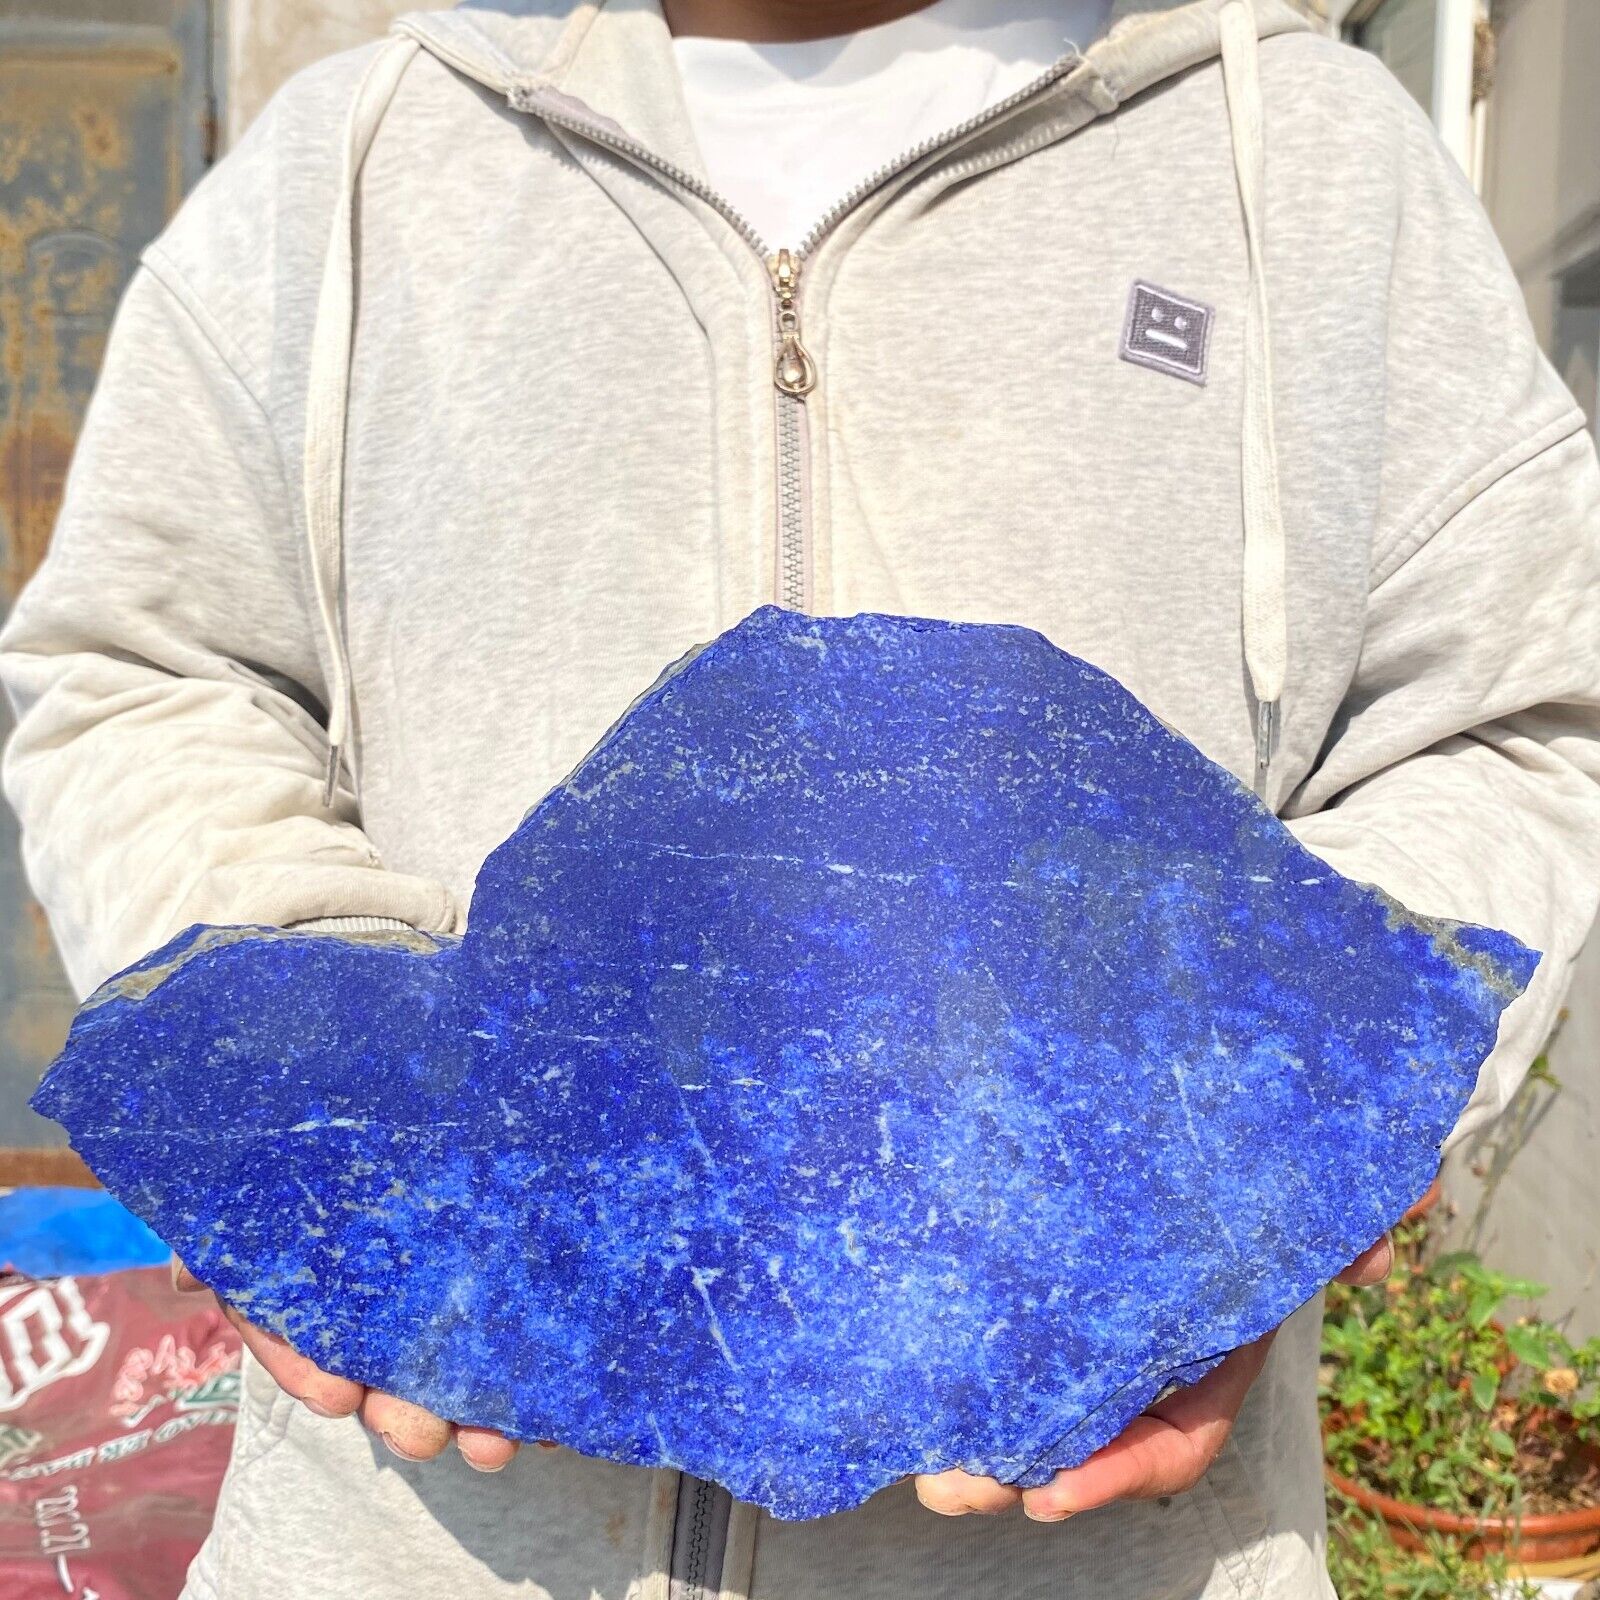 9.4lb Large Lapis Lazuli Dark Blue Crystal Rough Mineral Specimen From Afgh